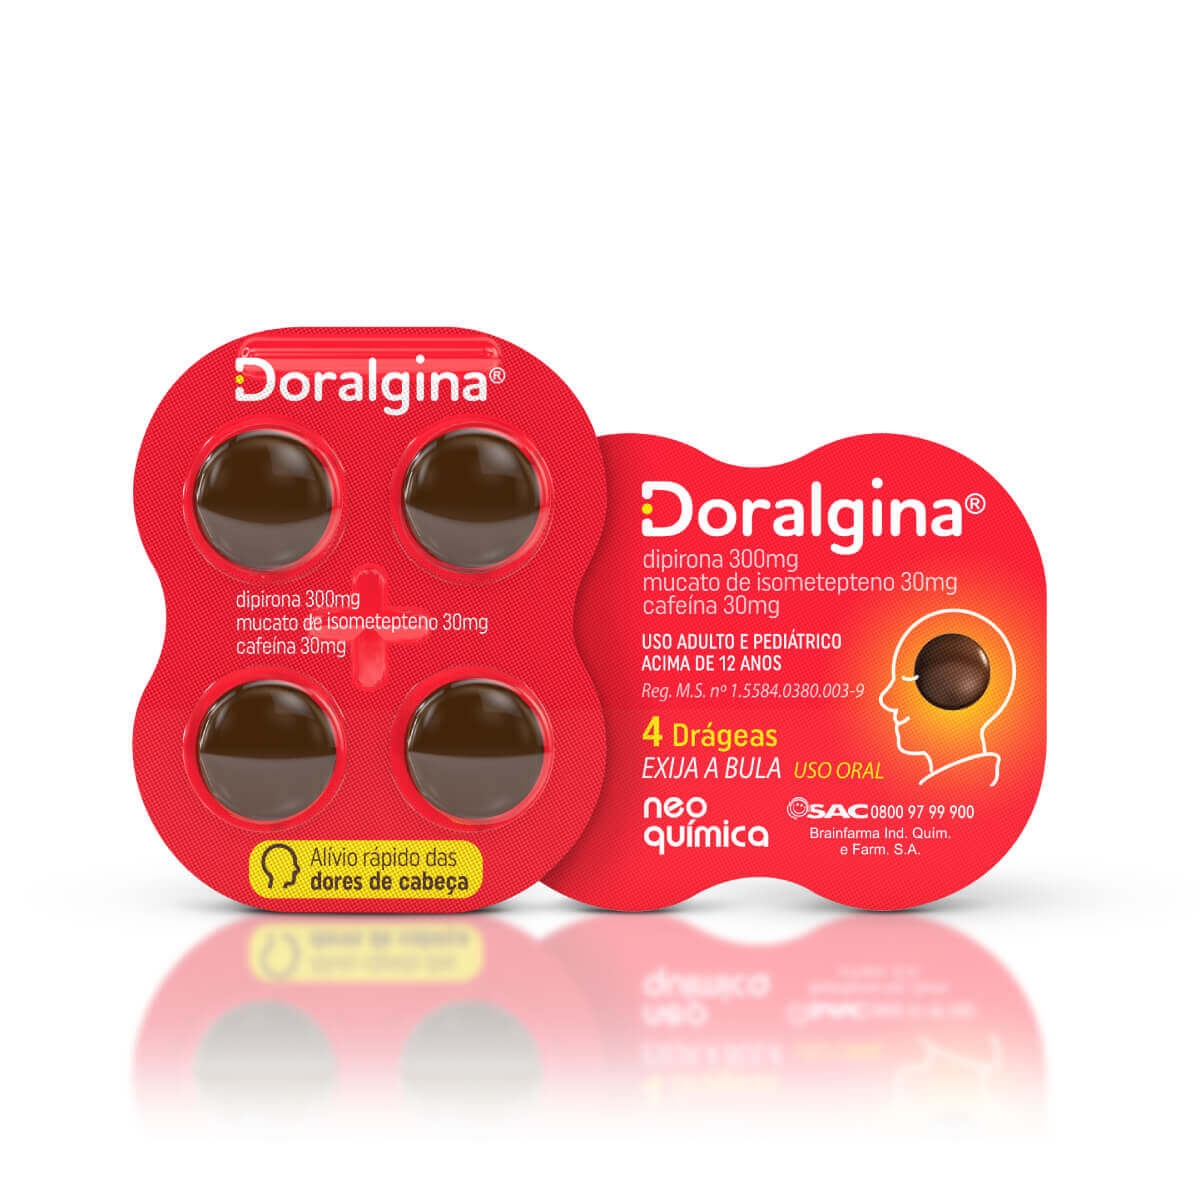 Doralgina Dipirona Sódica 300mg + Isometepteno 30mg + Cafeína 30mg 4 drágeas